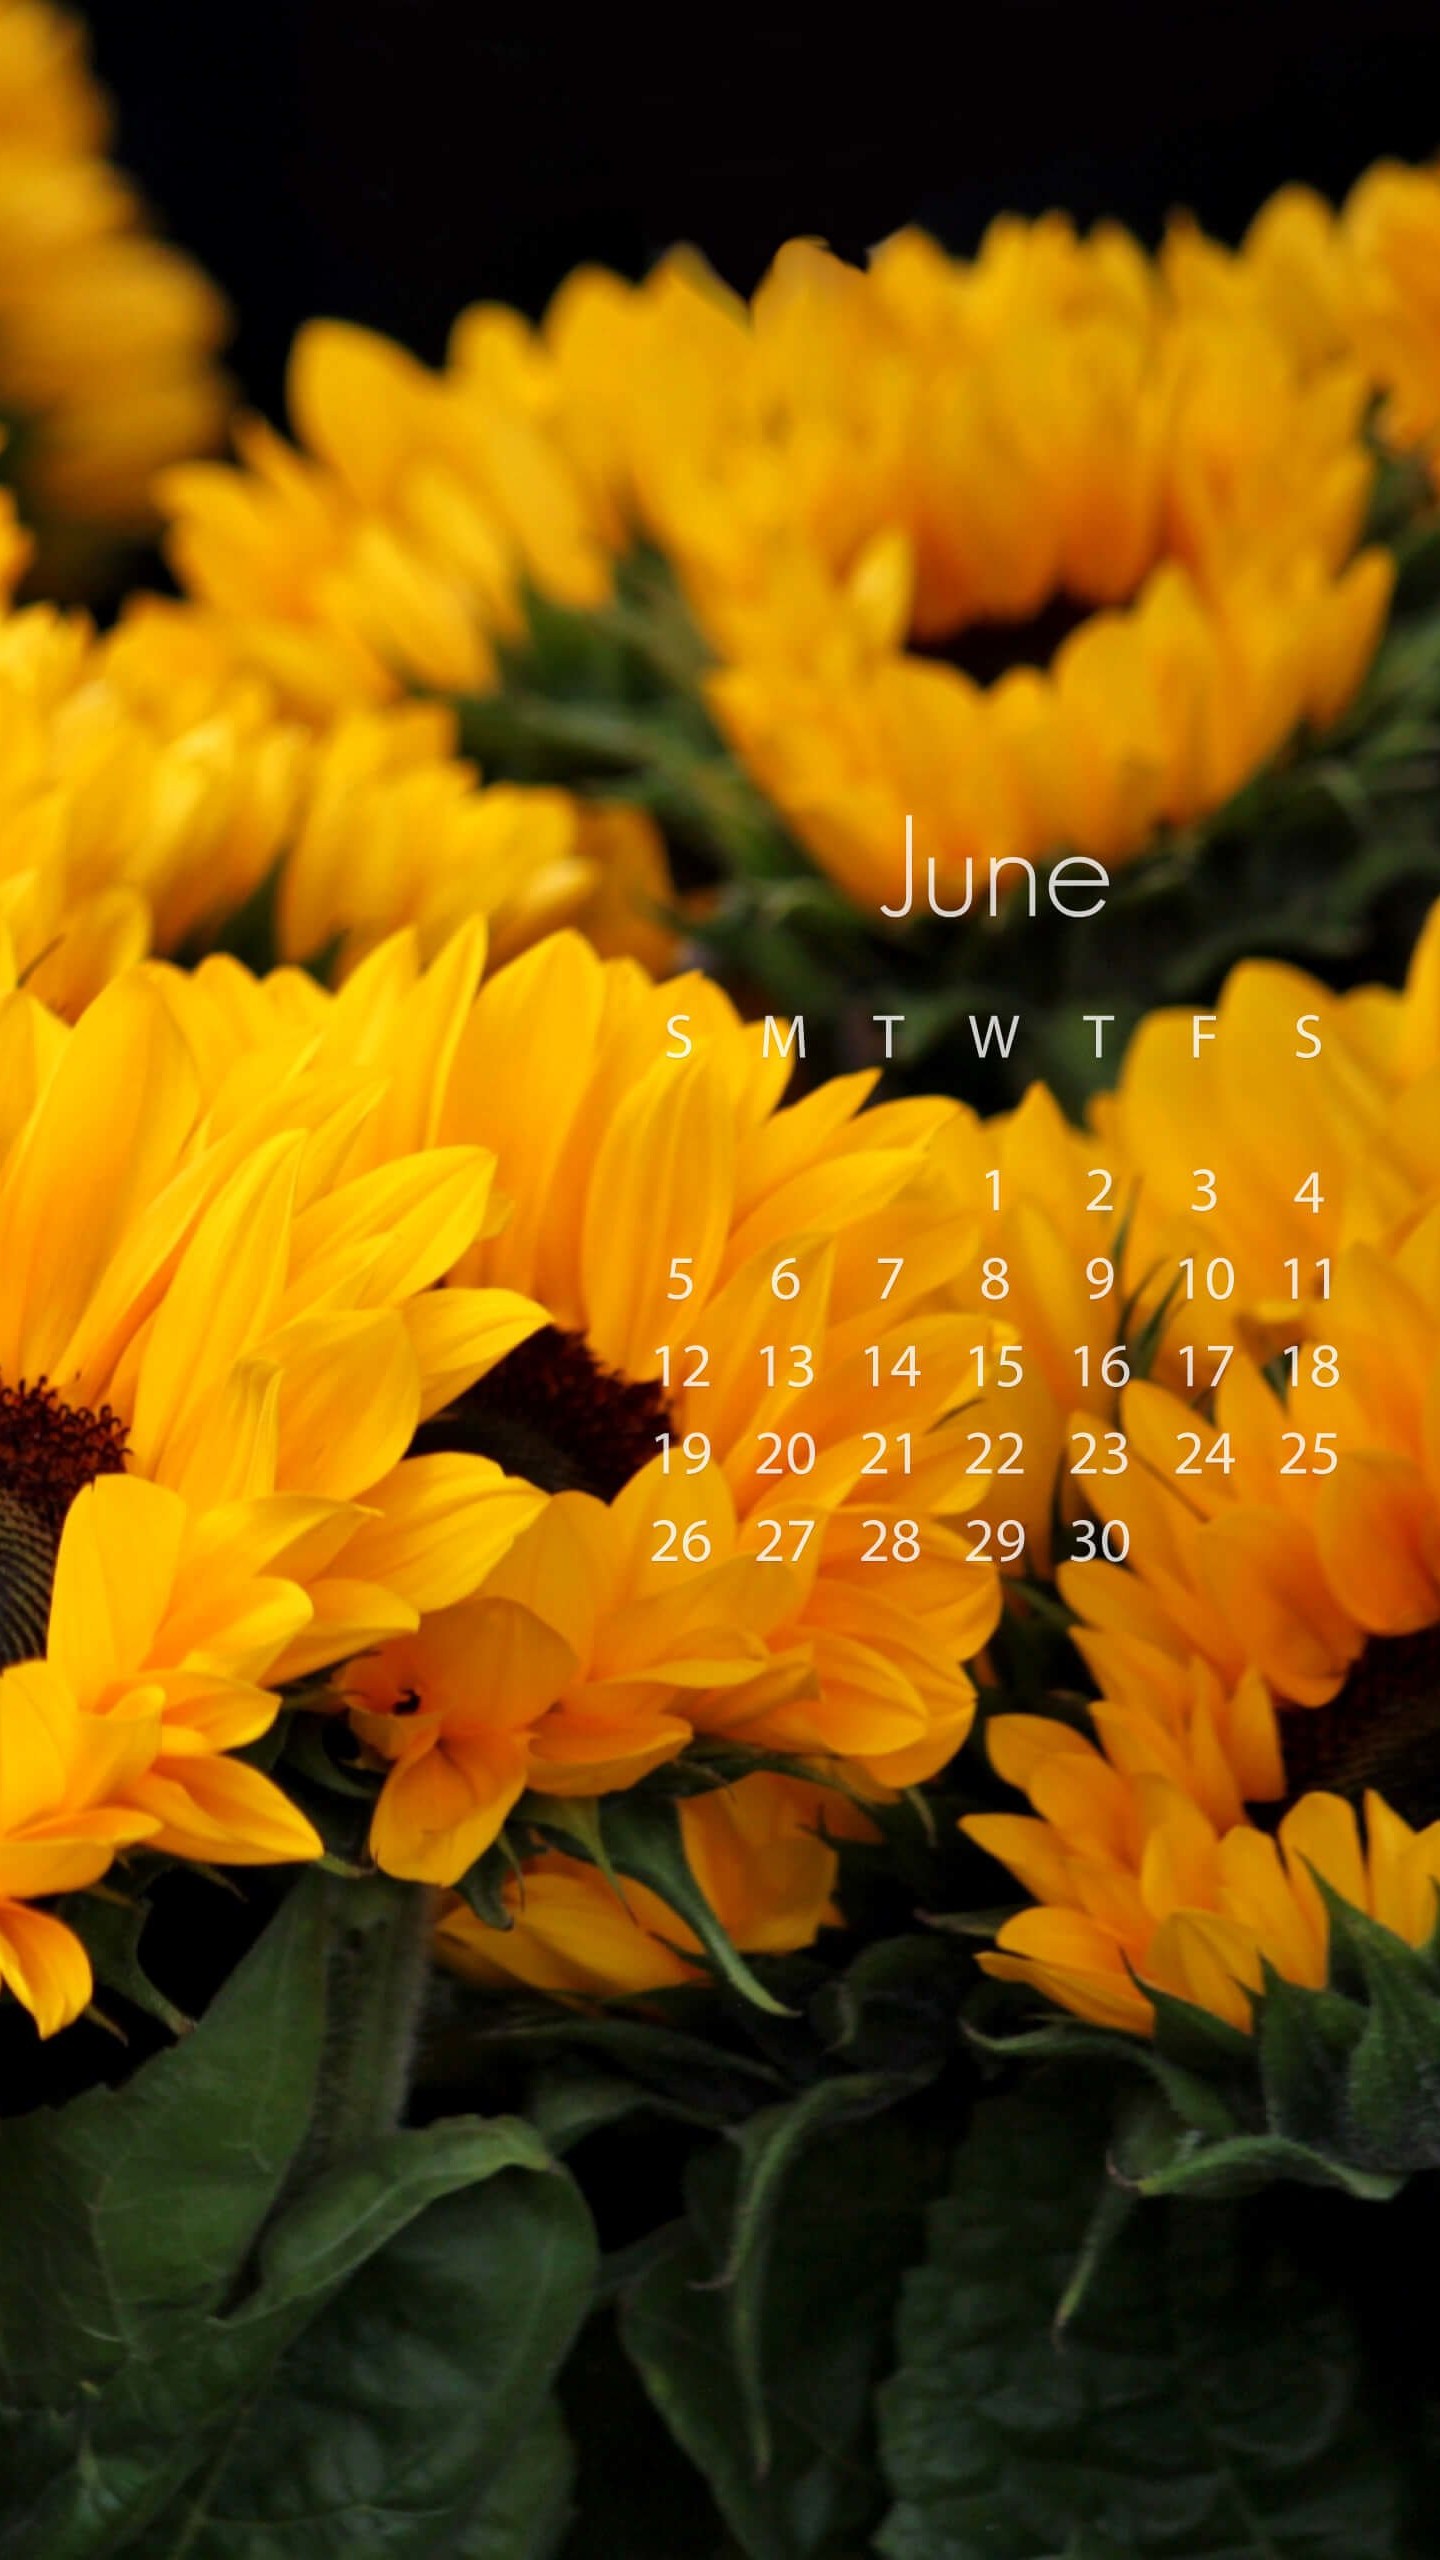 June 2016 Calendar Wallpaper for Google Nexus 6